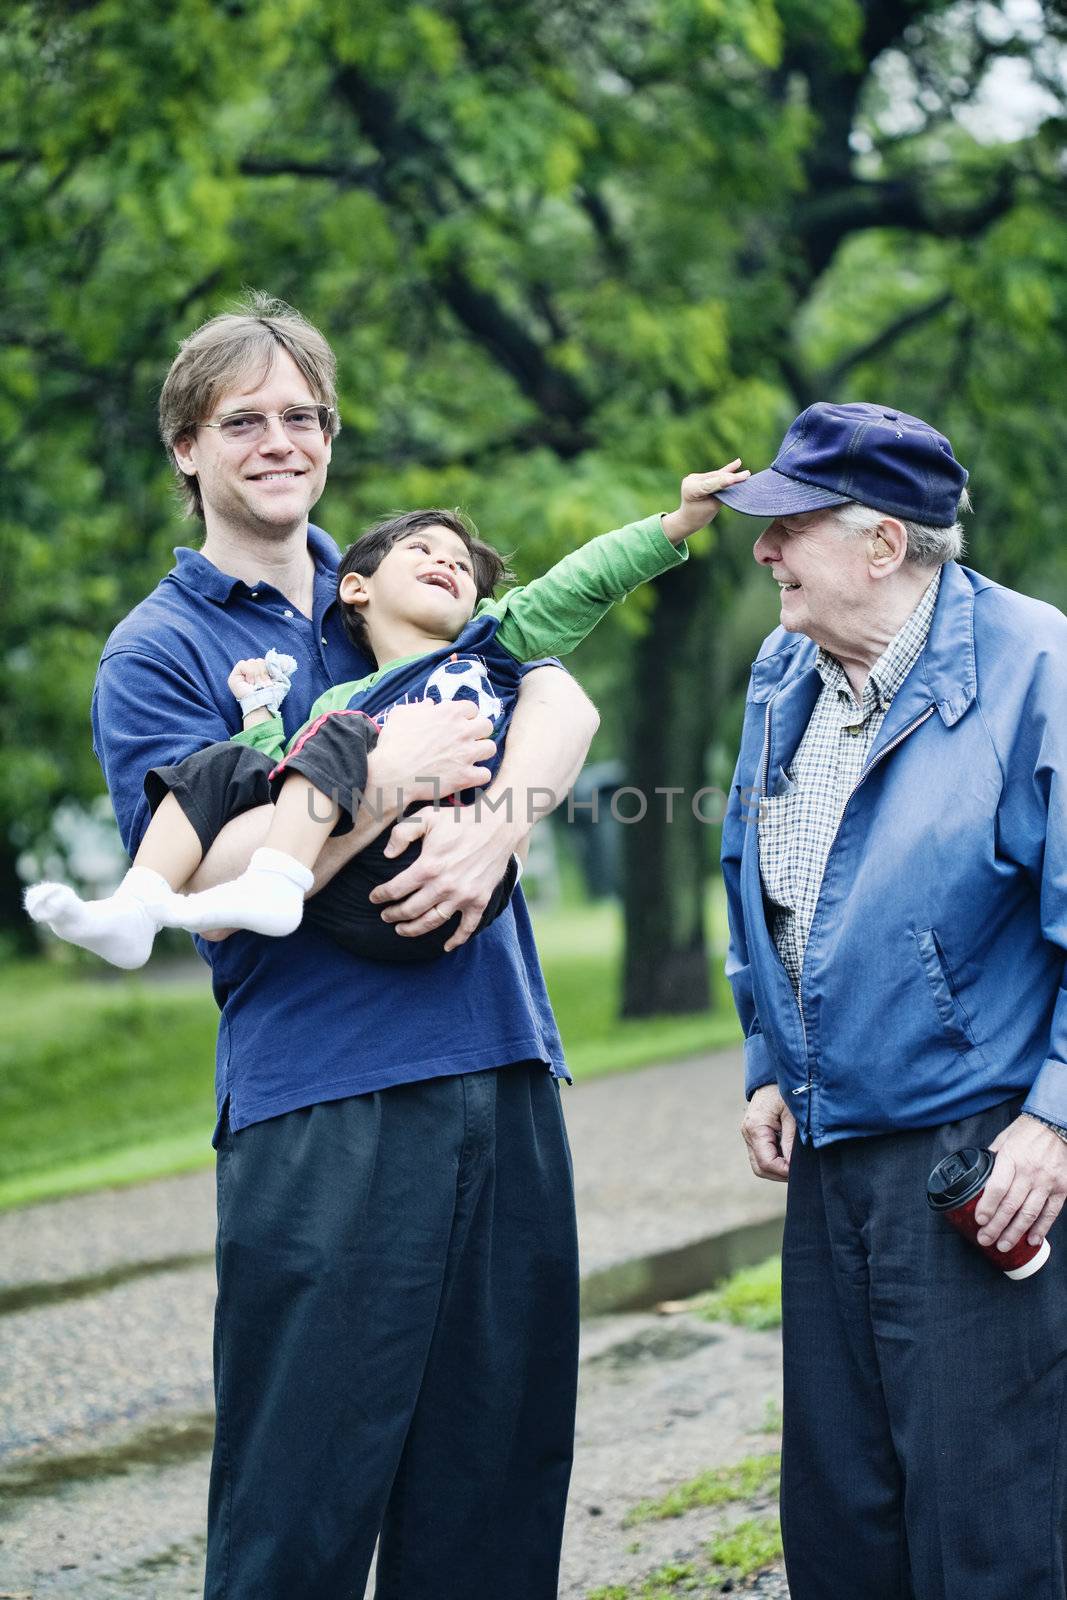 Three generations interacting together by jarenwicklund